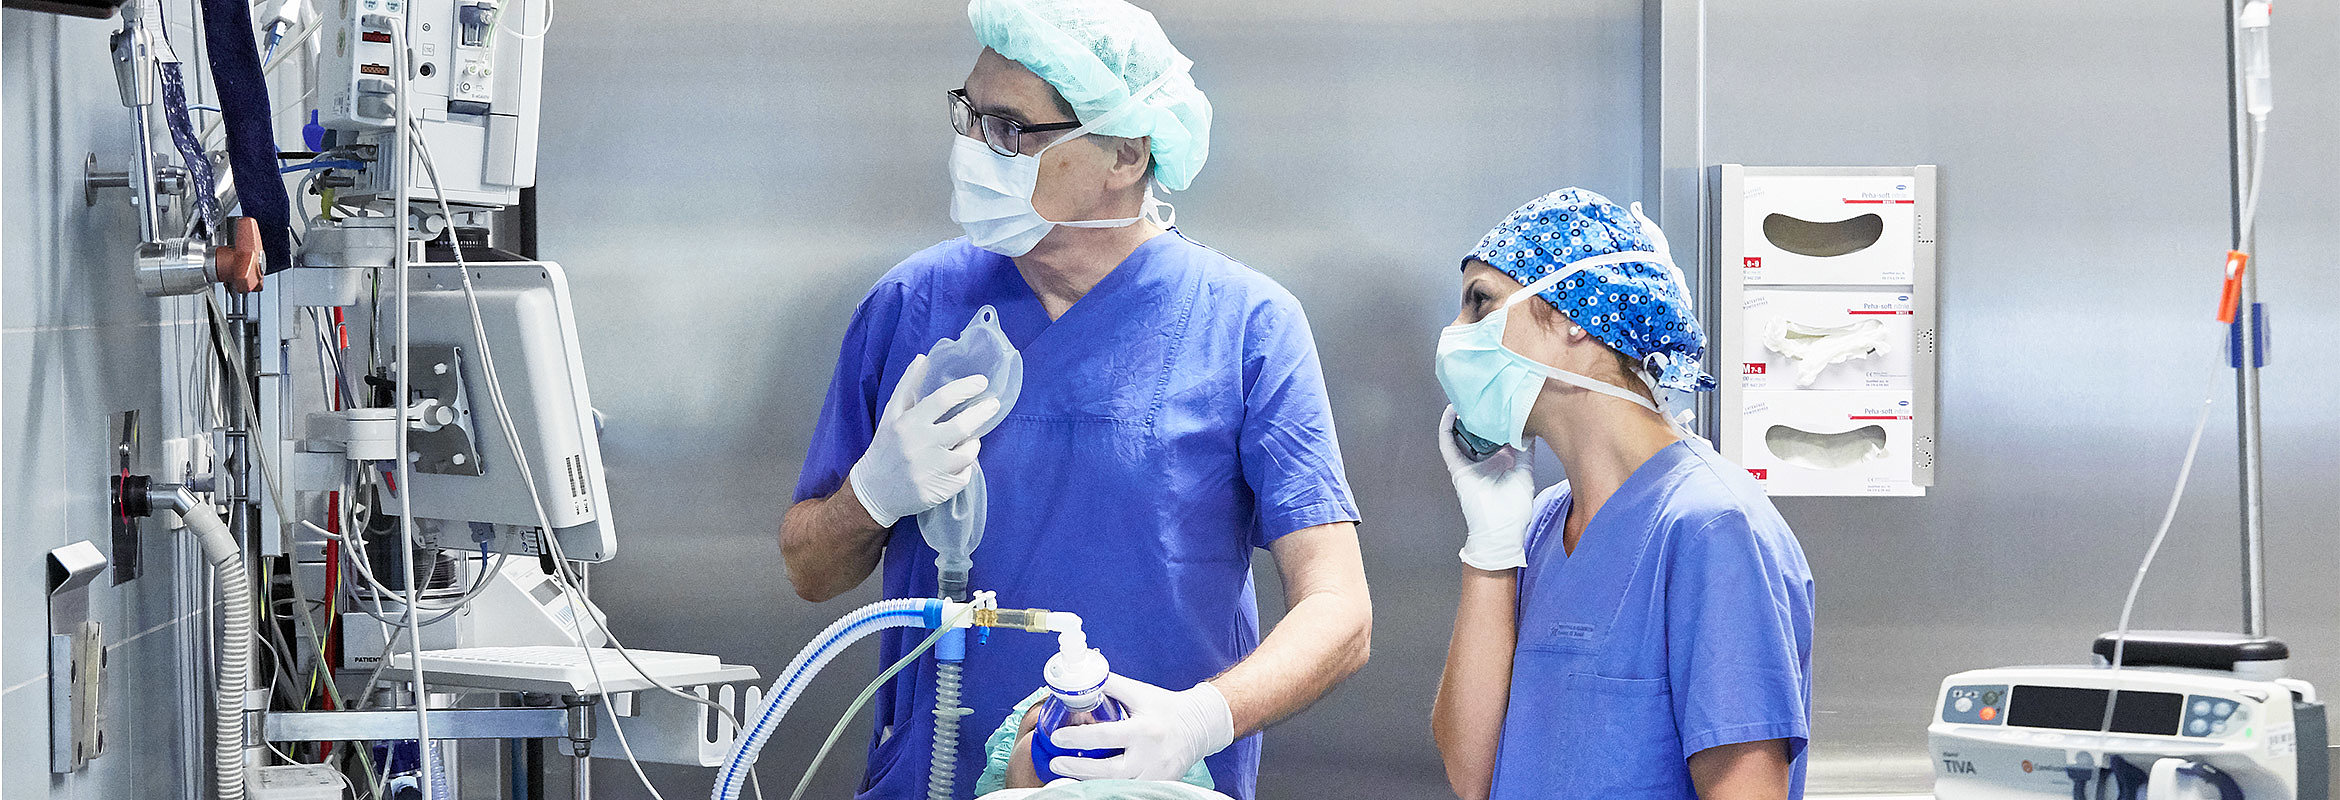 Anästhesisten im Operationssaal des Westpfalz-Klinikums Kusel